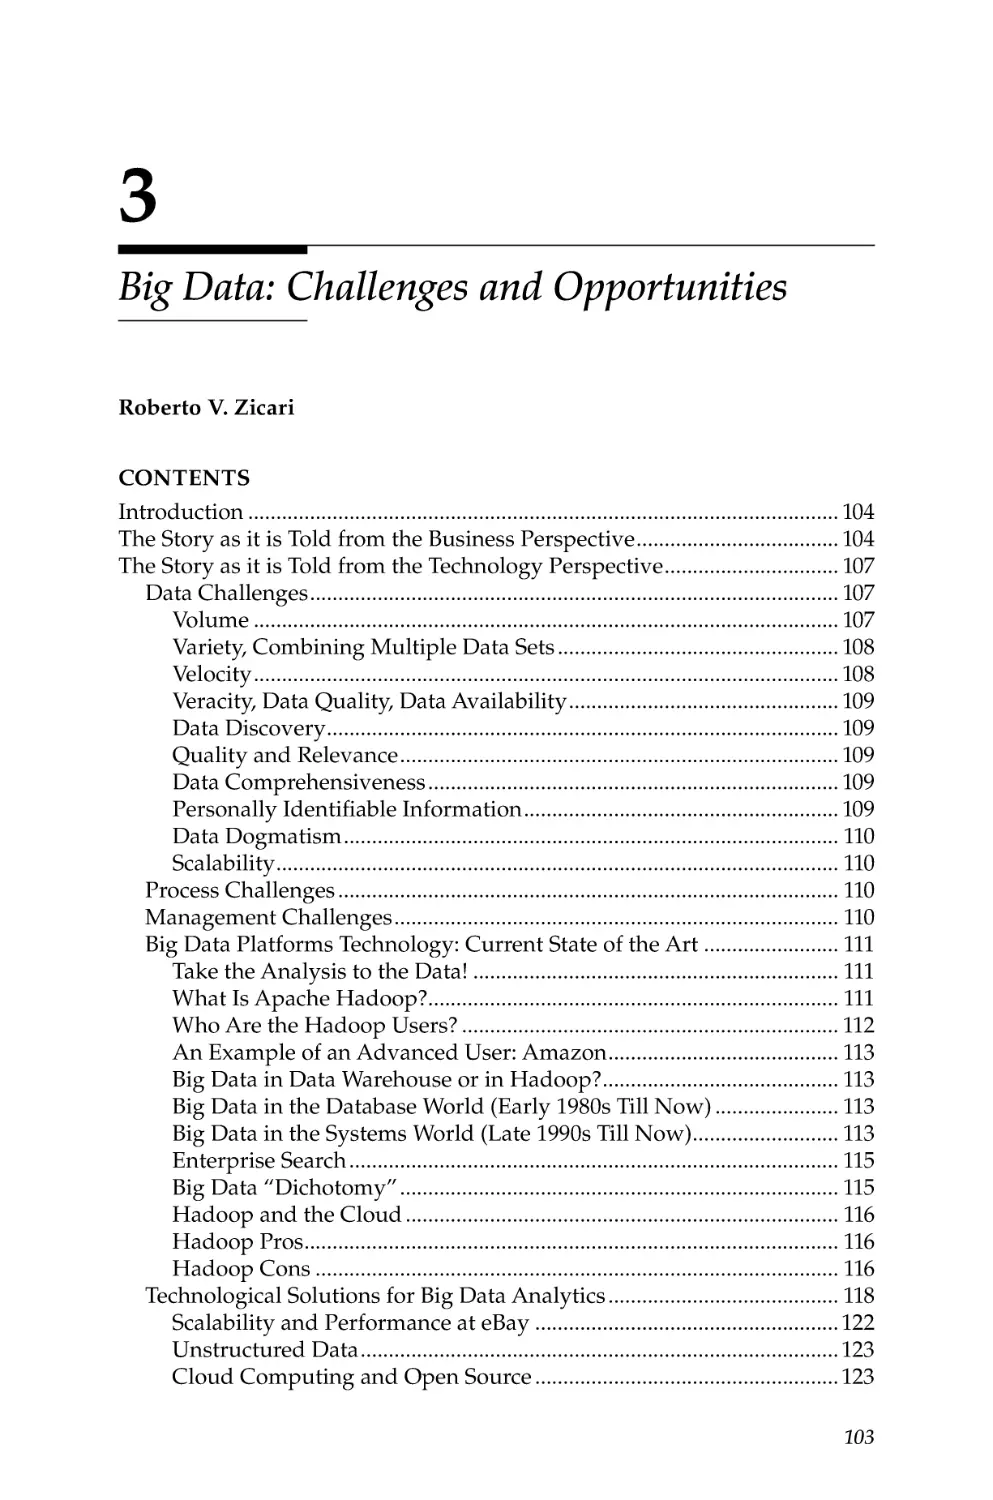 3. Big Data